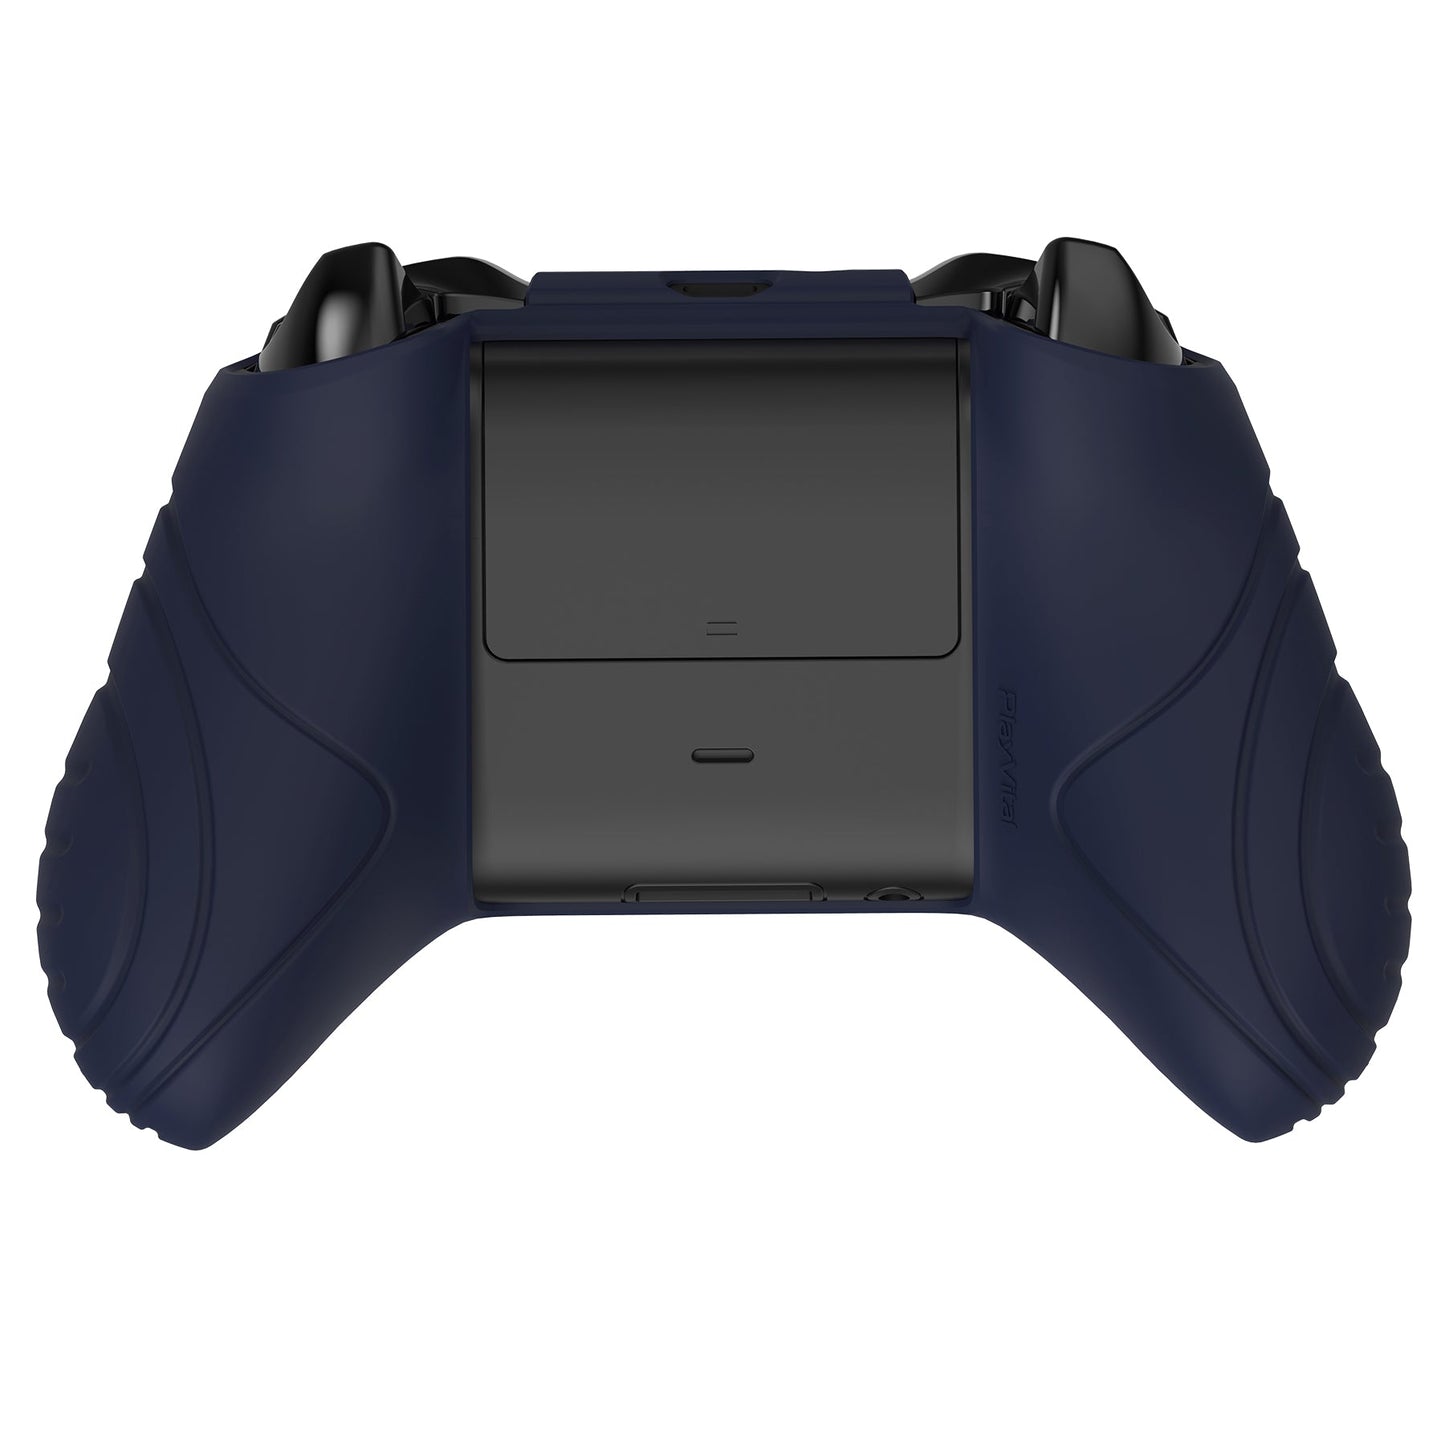 PlayVital Samurai Edition Midnight Blue Anti-Slip Controller Grip Silicone Skin for Xbox One X/S Controller, Ergonomic Soft Rubber Protective Case Cover for Xbox One S/X Controller with Black Thumb Stick Caps - XOQ036 playvital